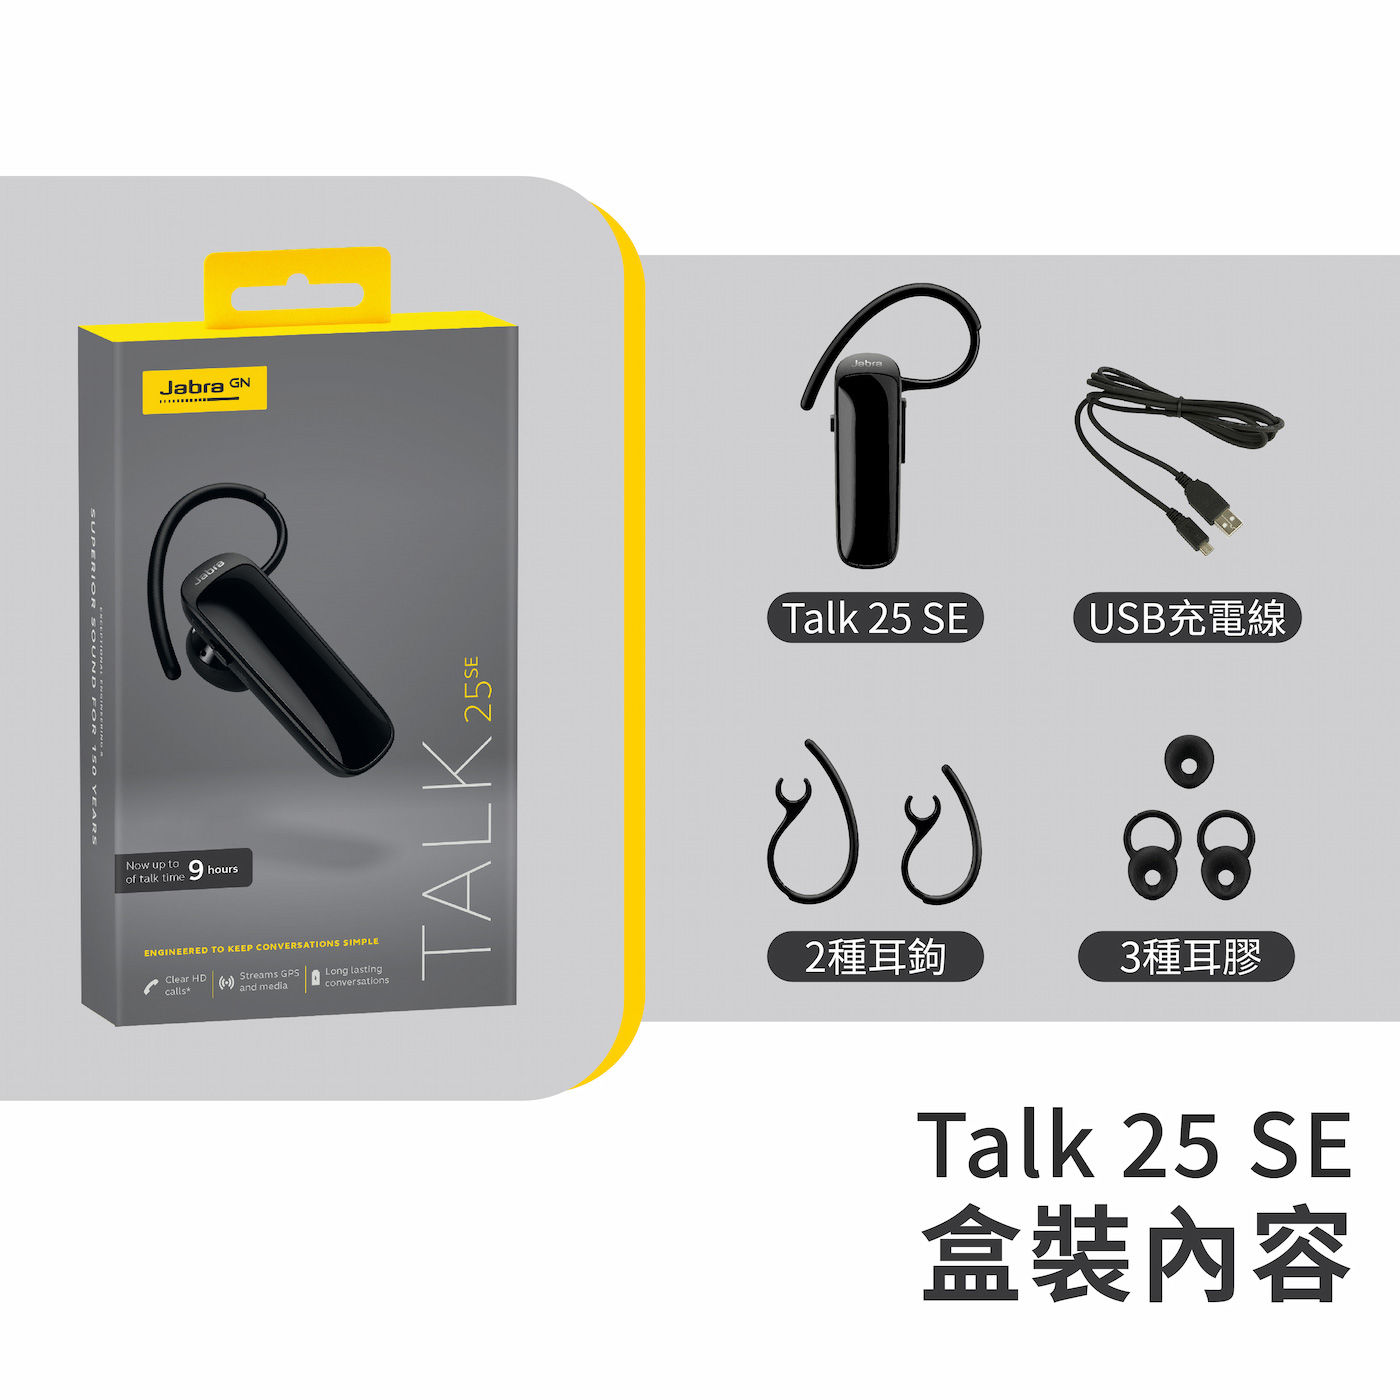 Jabra Talk 25 SE 立體聲單耳藍牙耳機，盒裝內容:單耳耳機、USB充電線、2種耳鉤、3種耳膠